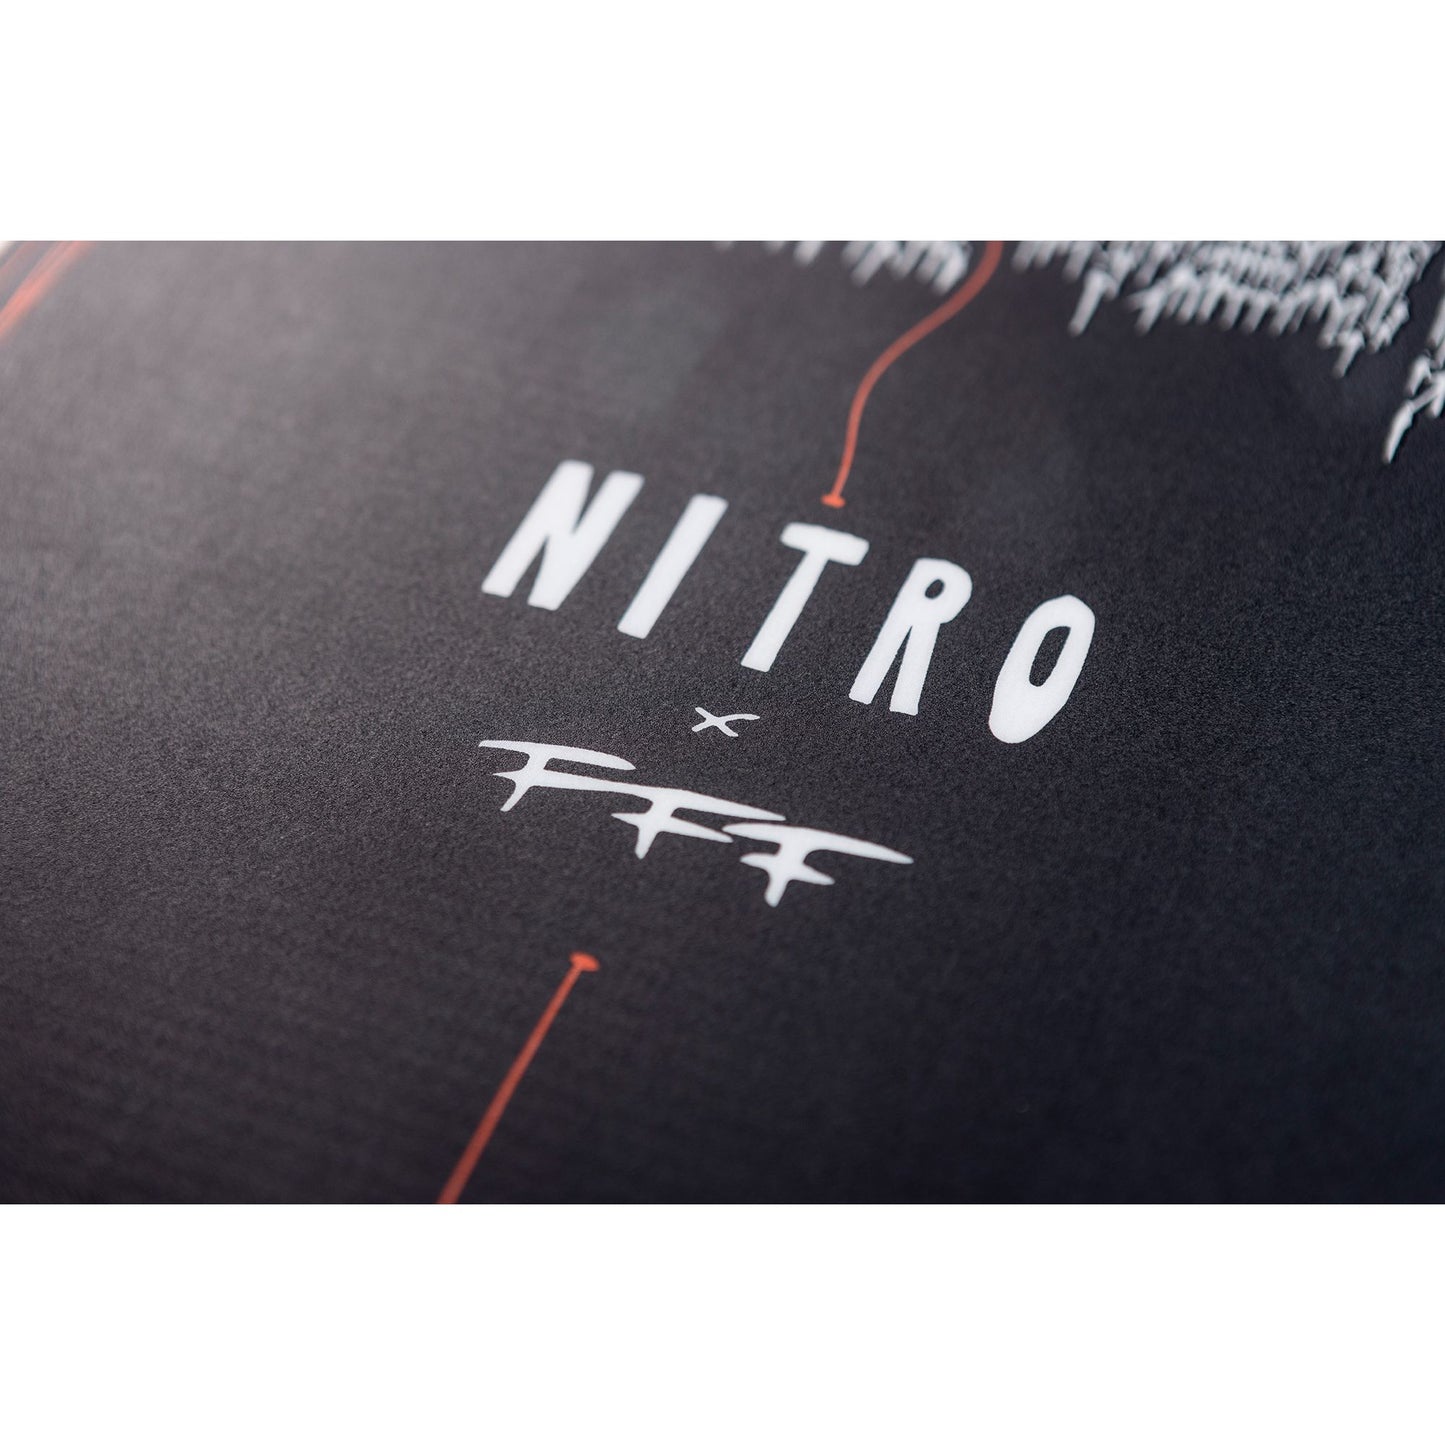 Nitro T1 x FFF Snowboard 2024 158W Snowboards